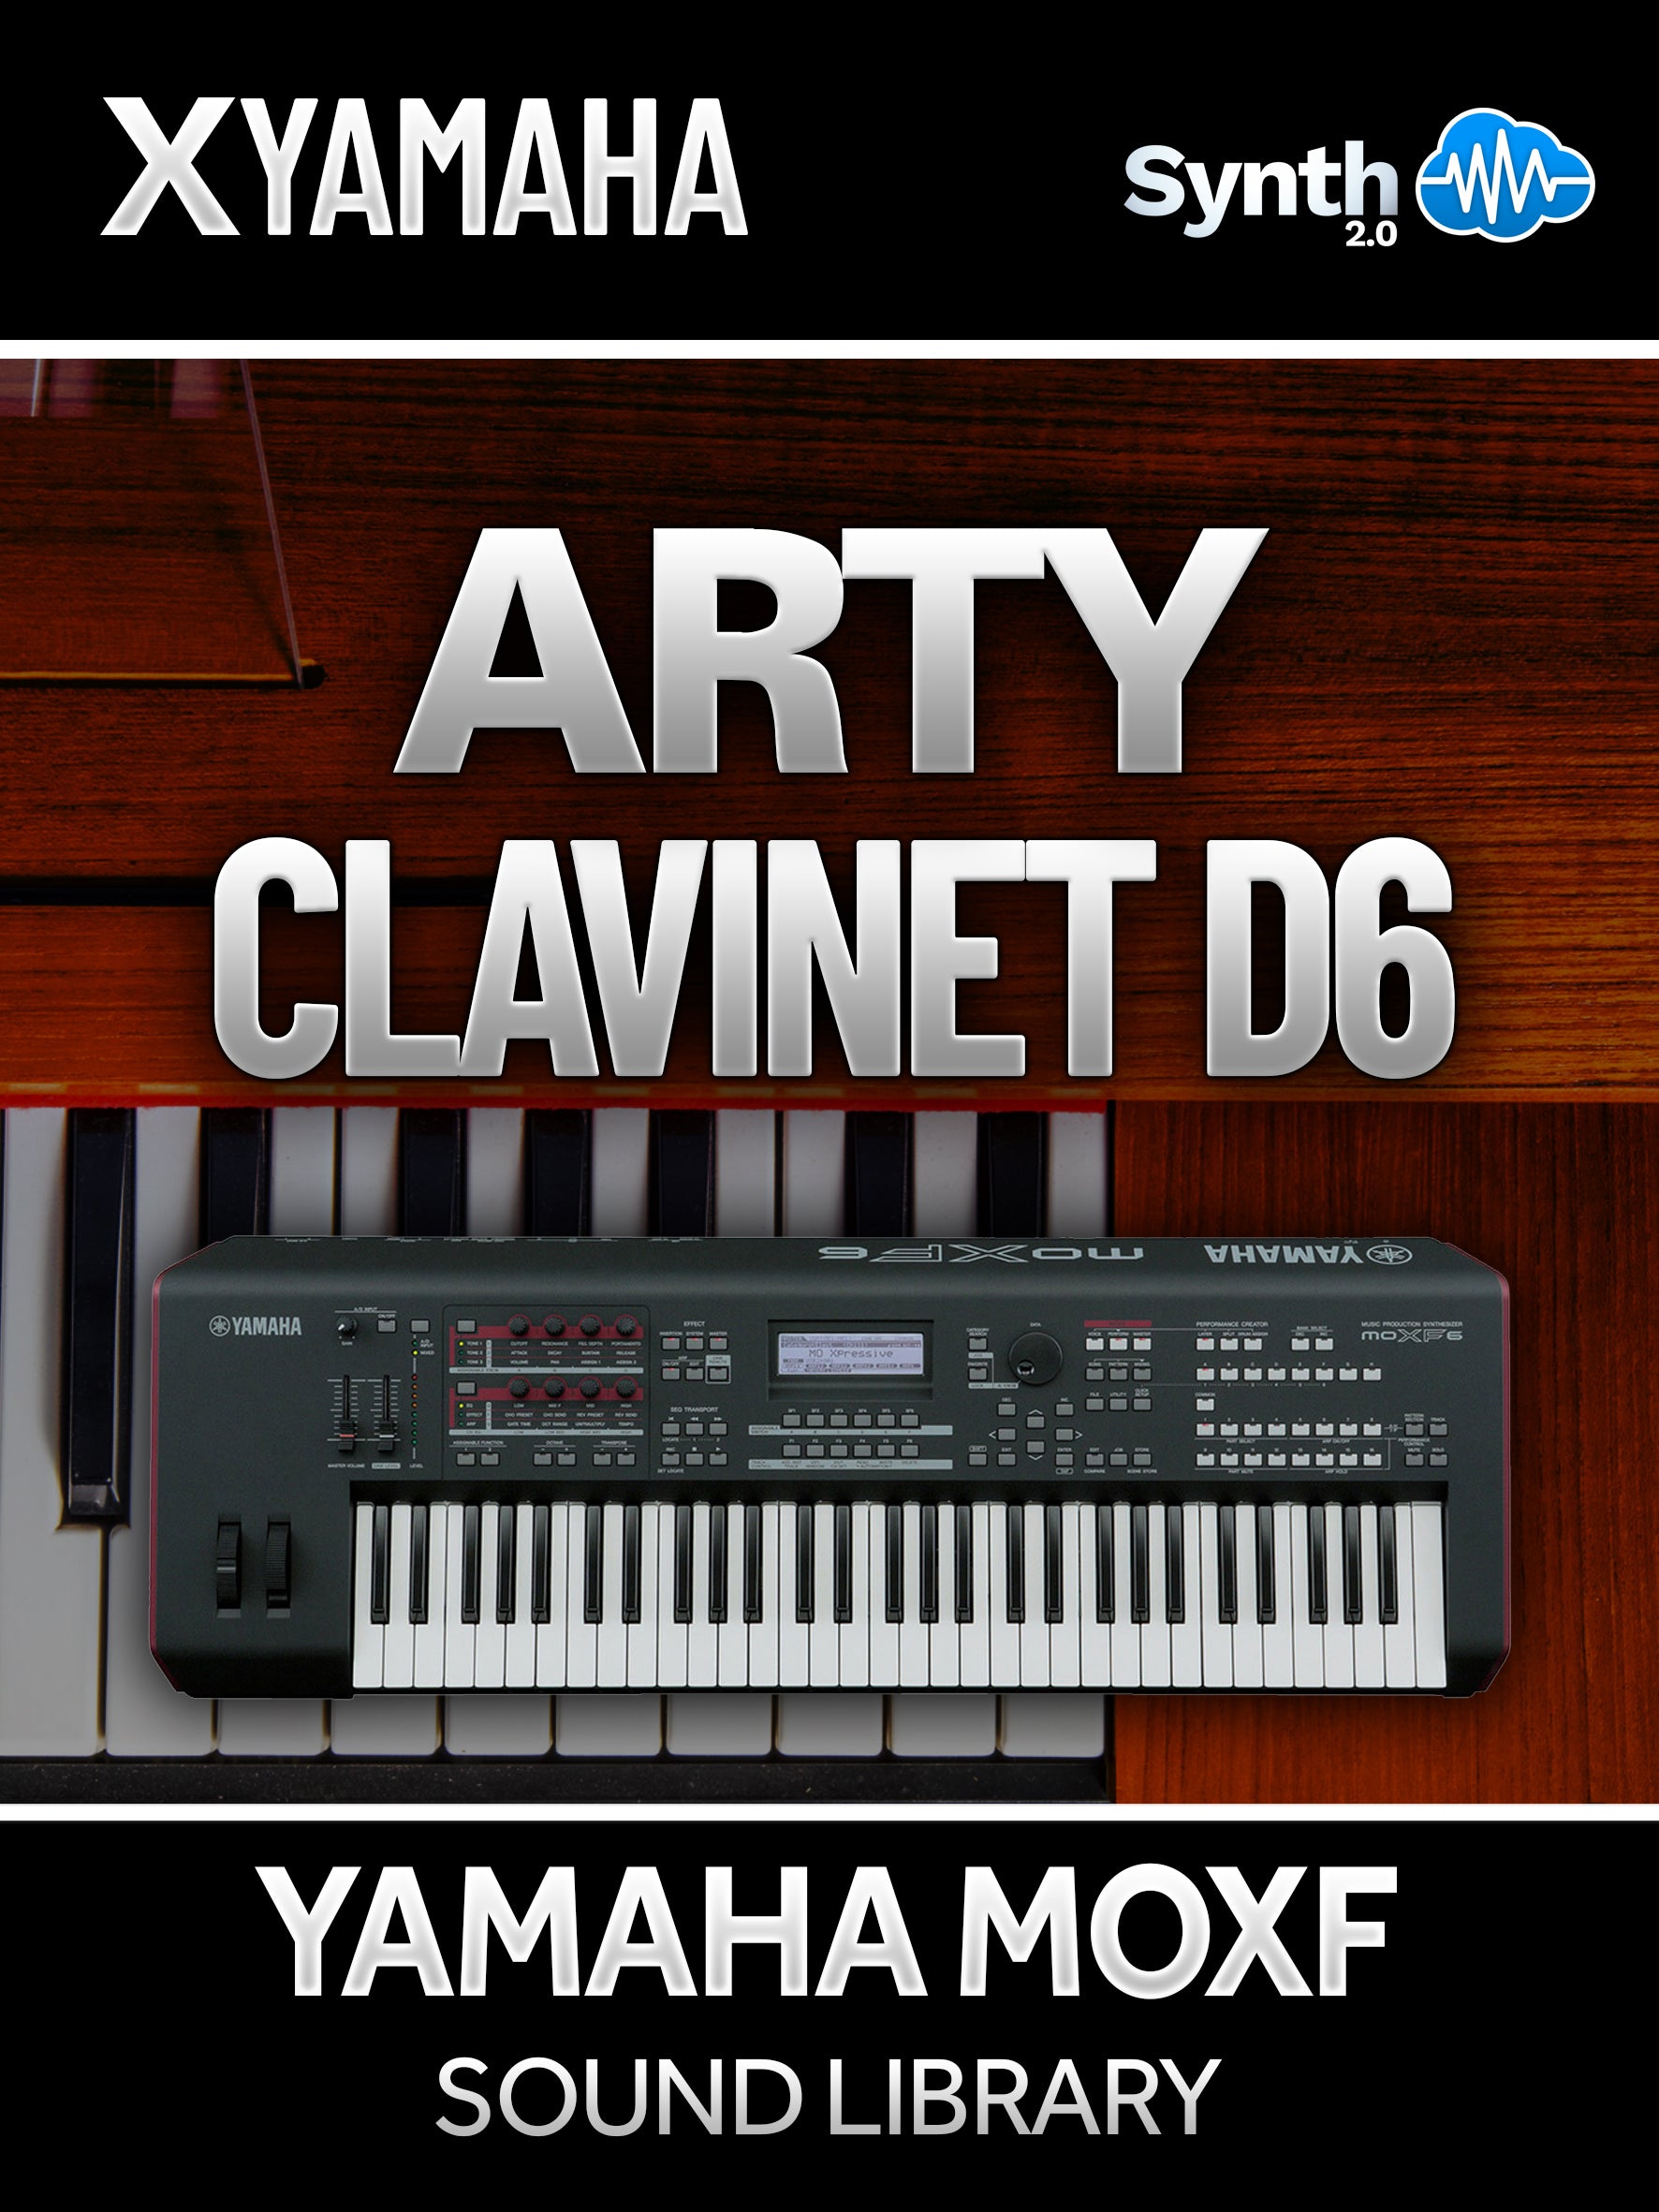 APL004 - Arty Clavinet D6 - Yamaha MOXF (512 mb RAM)